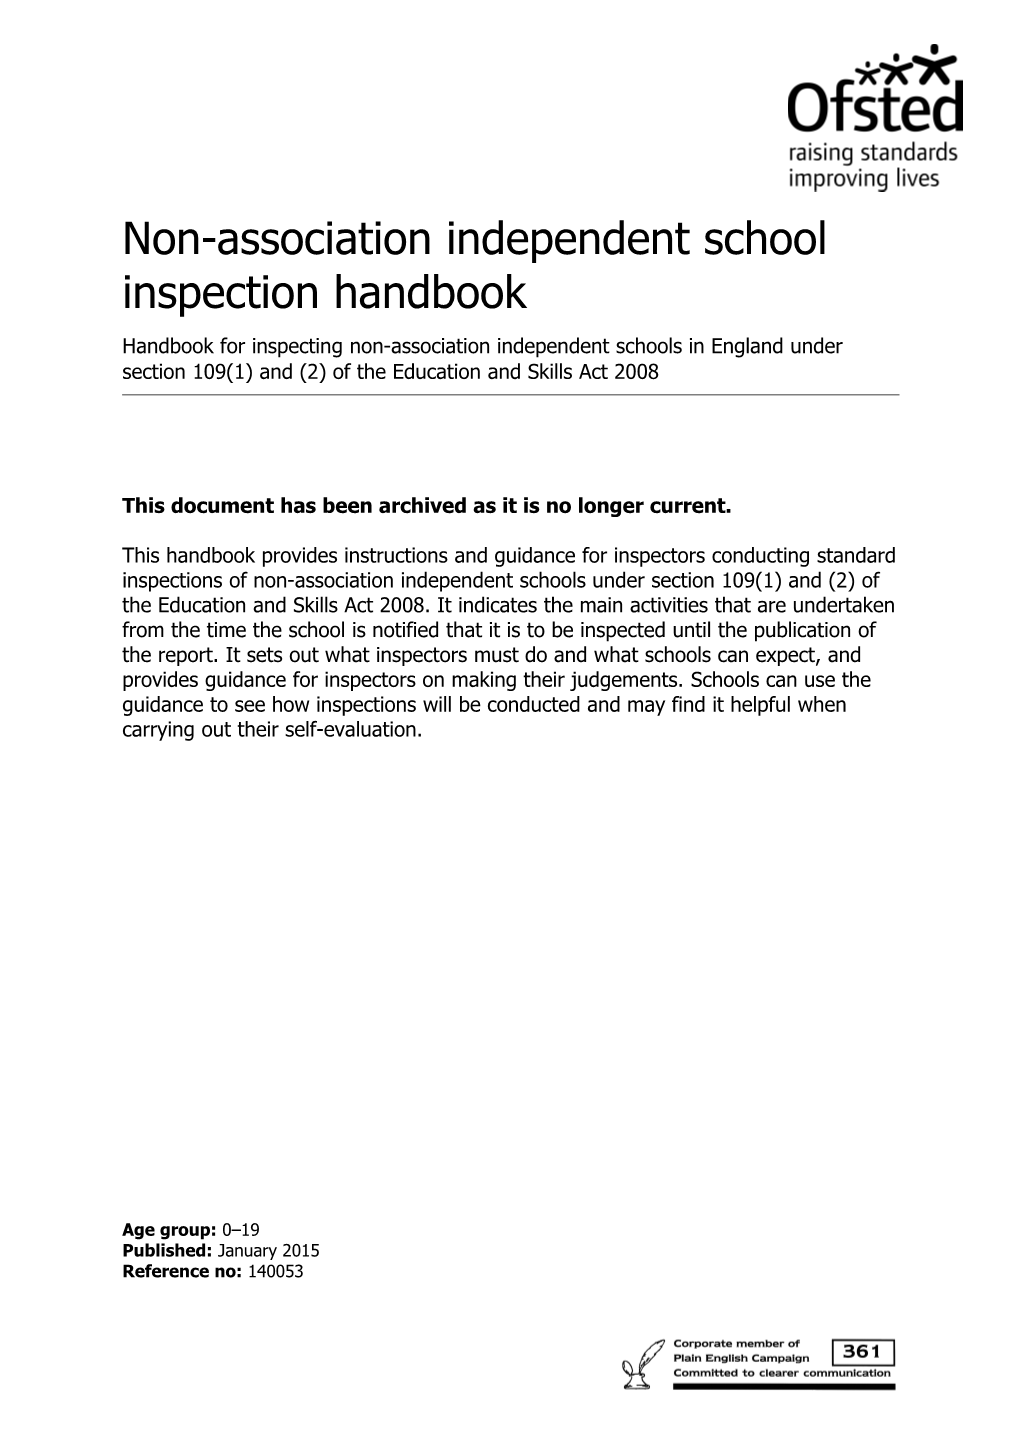 Non-Association Independent School Inspection Handbook